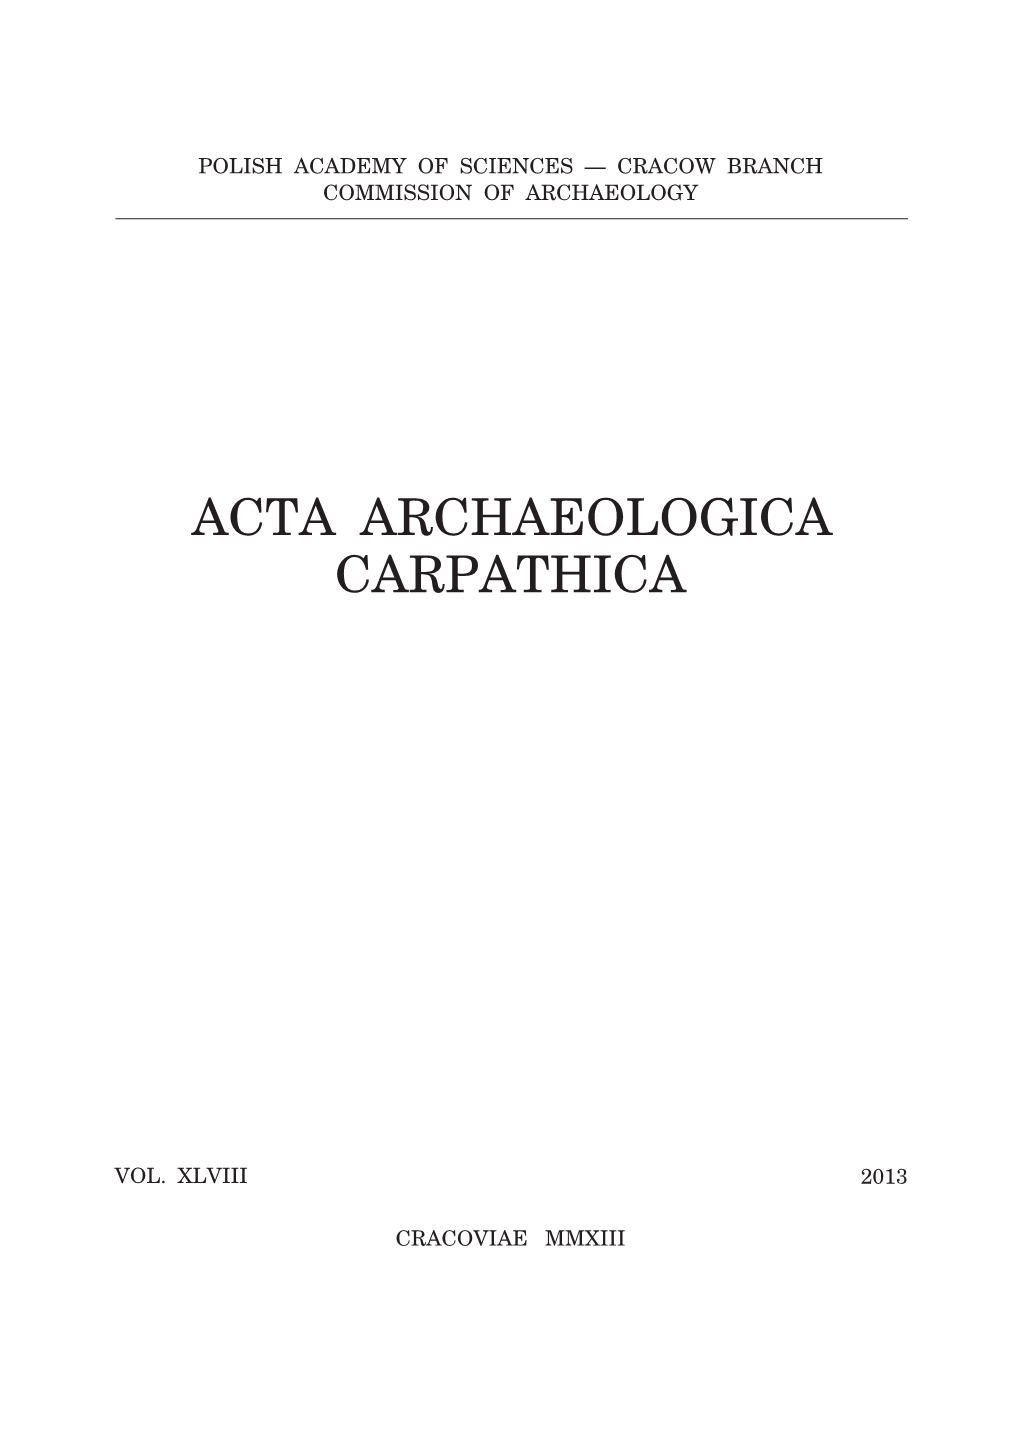 Acta Archaeologica Carpathica